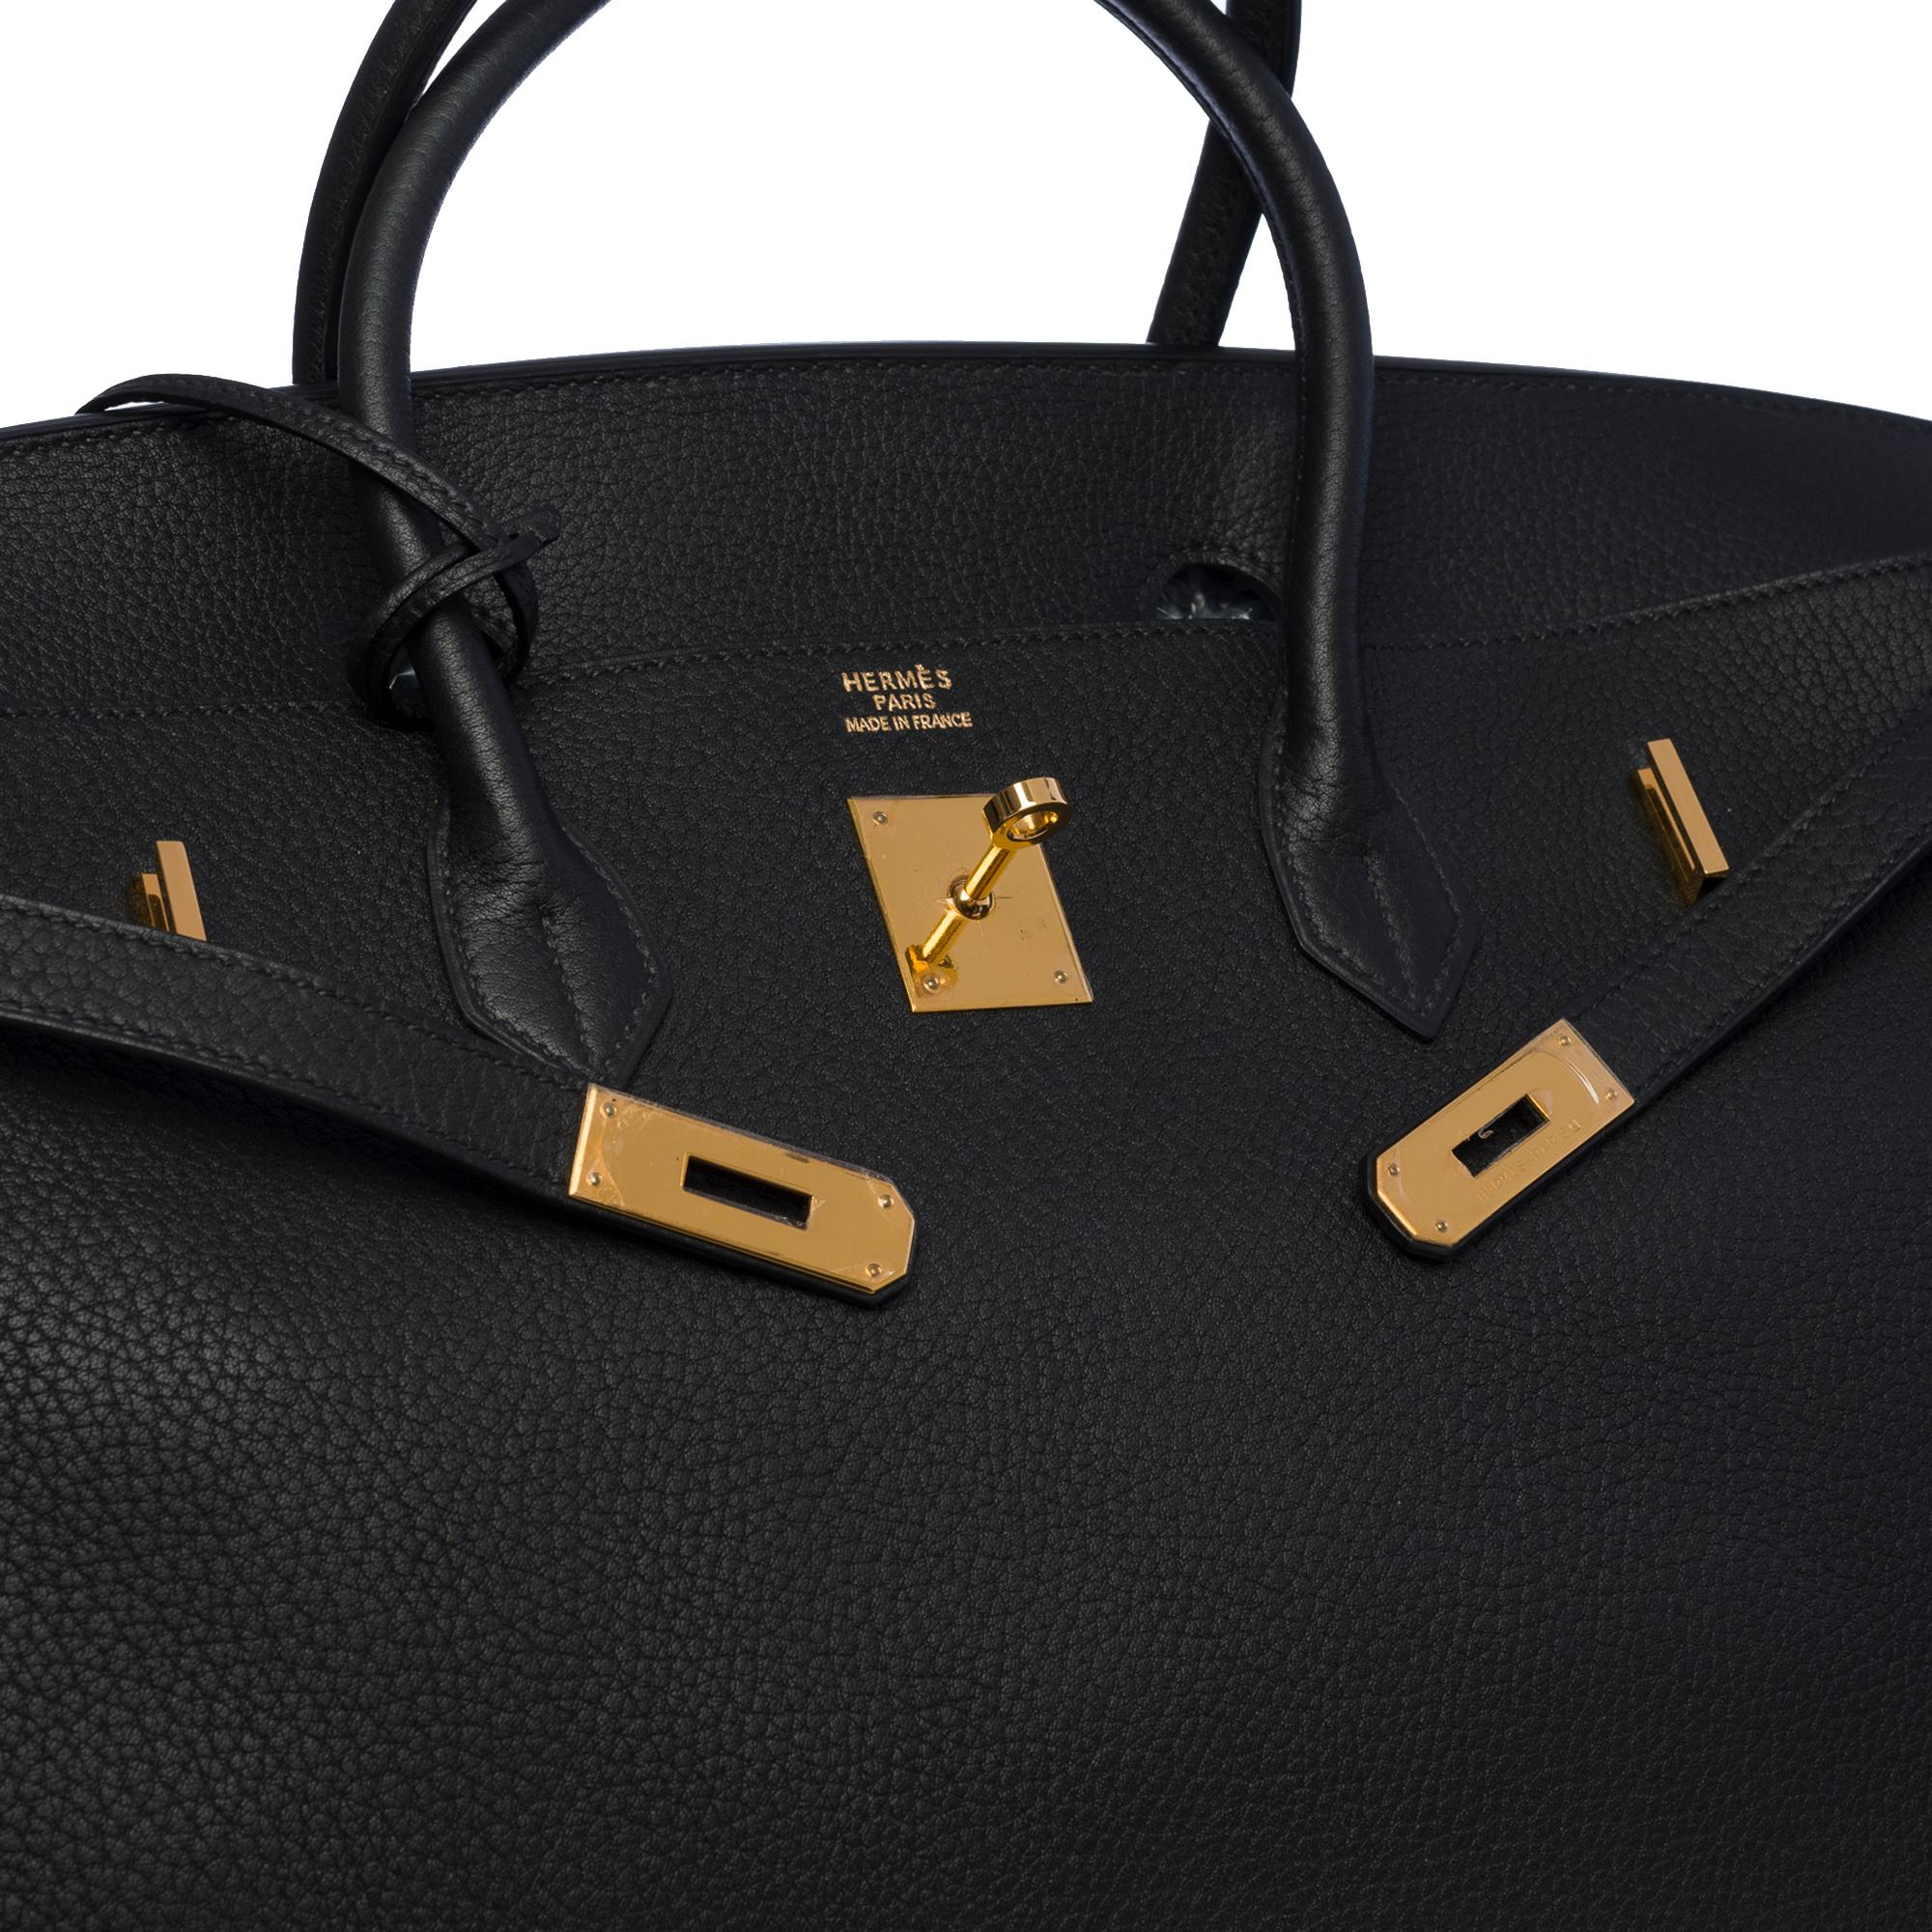 Stunning Hermes Birkin 40cm handbag in Black Togo leather, GHW 2